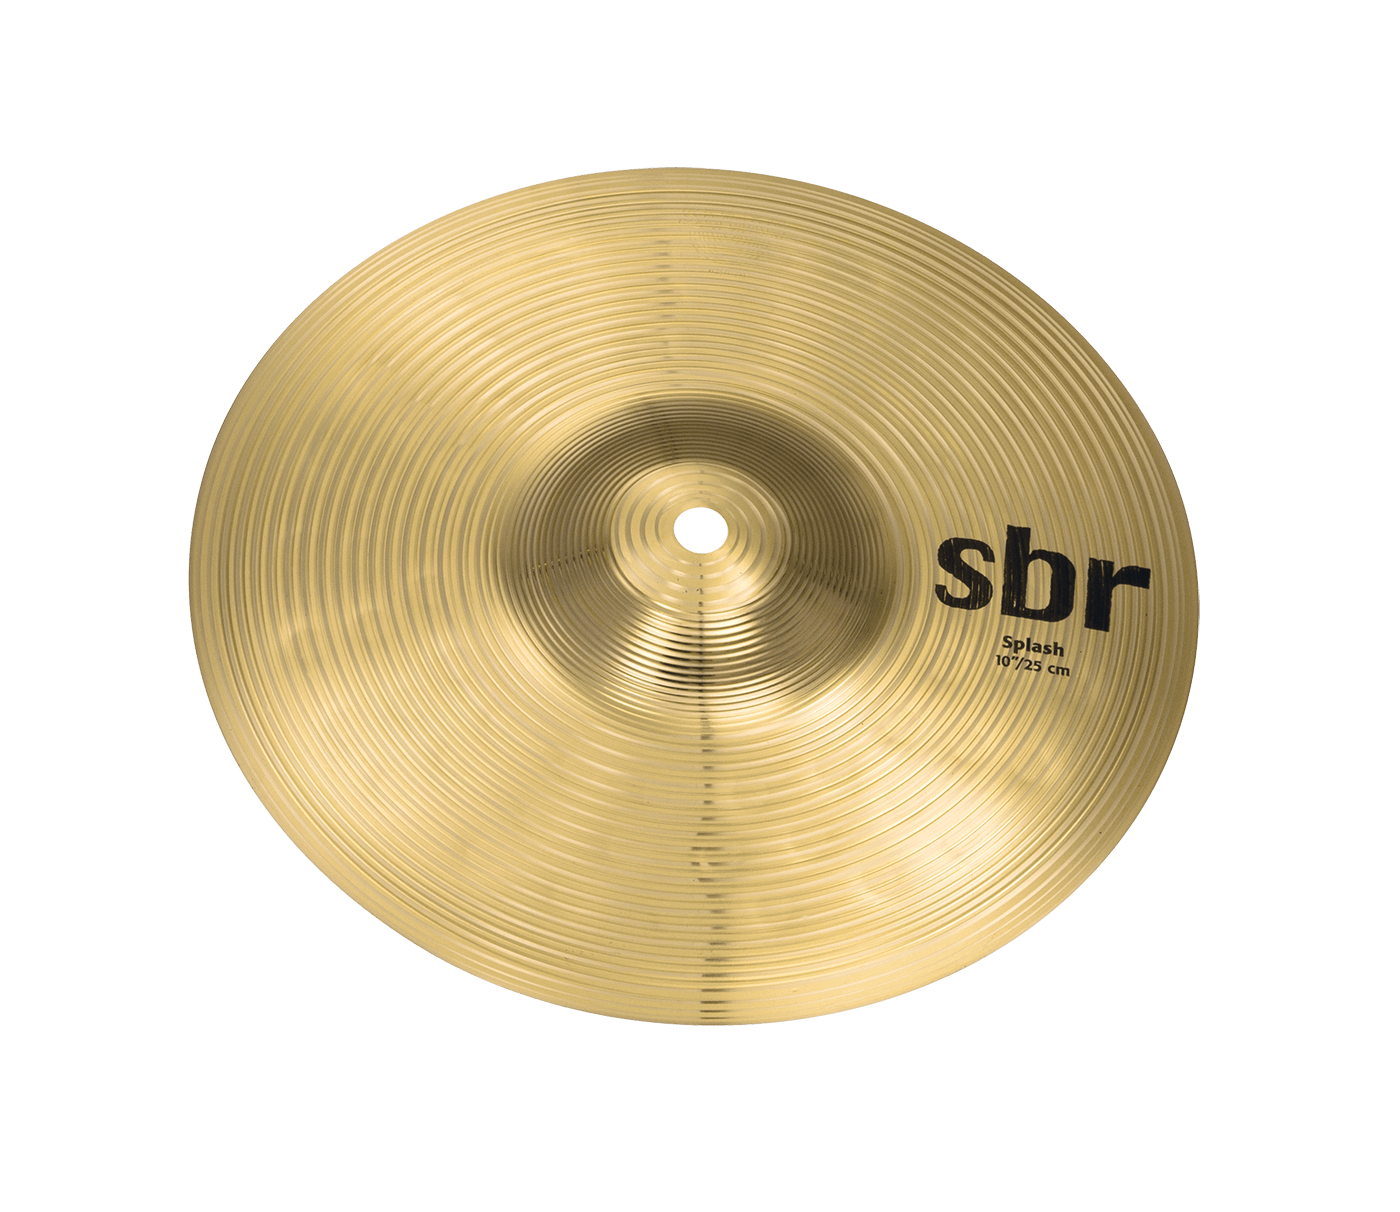 Sabian SBR Promotional Set Cymbal Pack SBR5003G FREE 10" Splash Cymbal